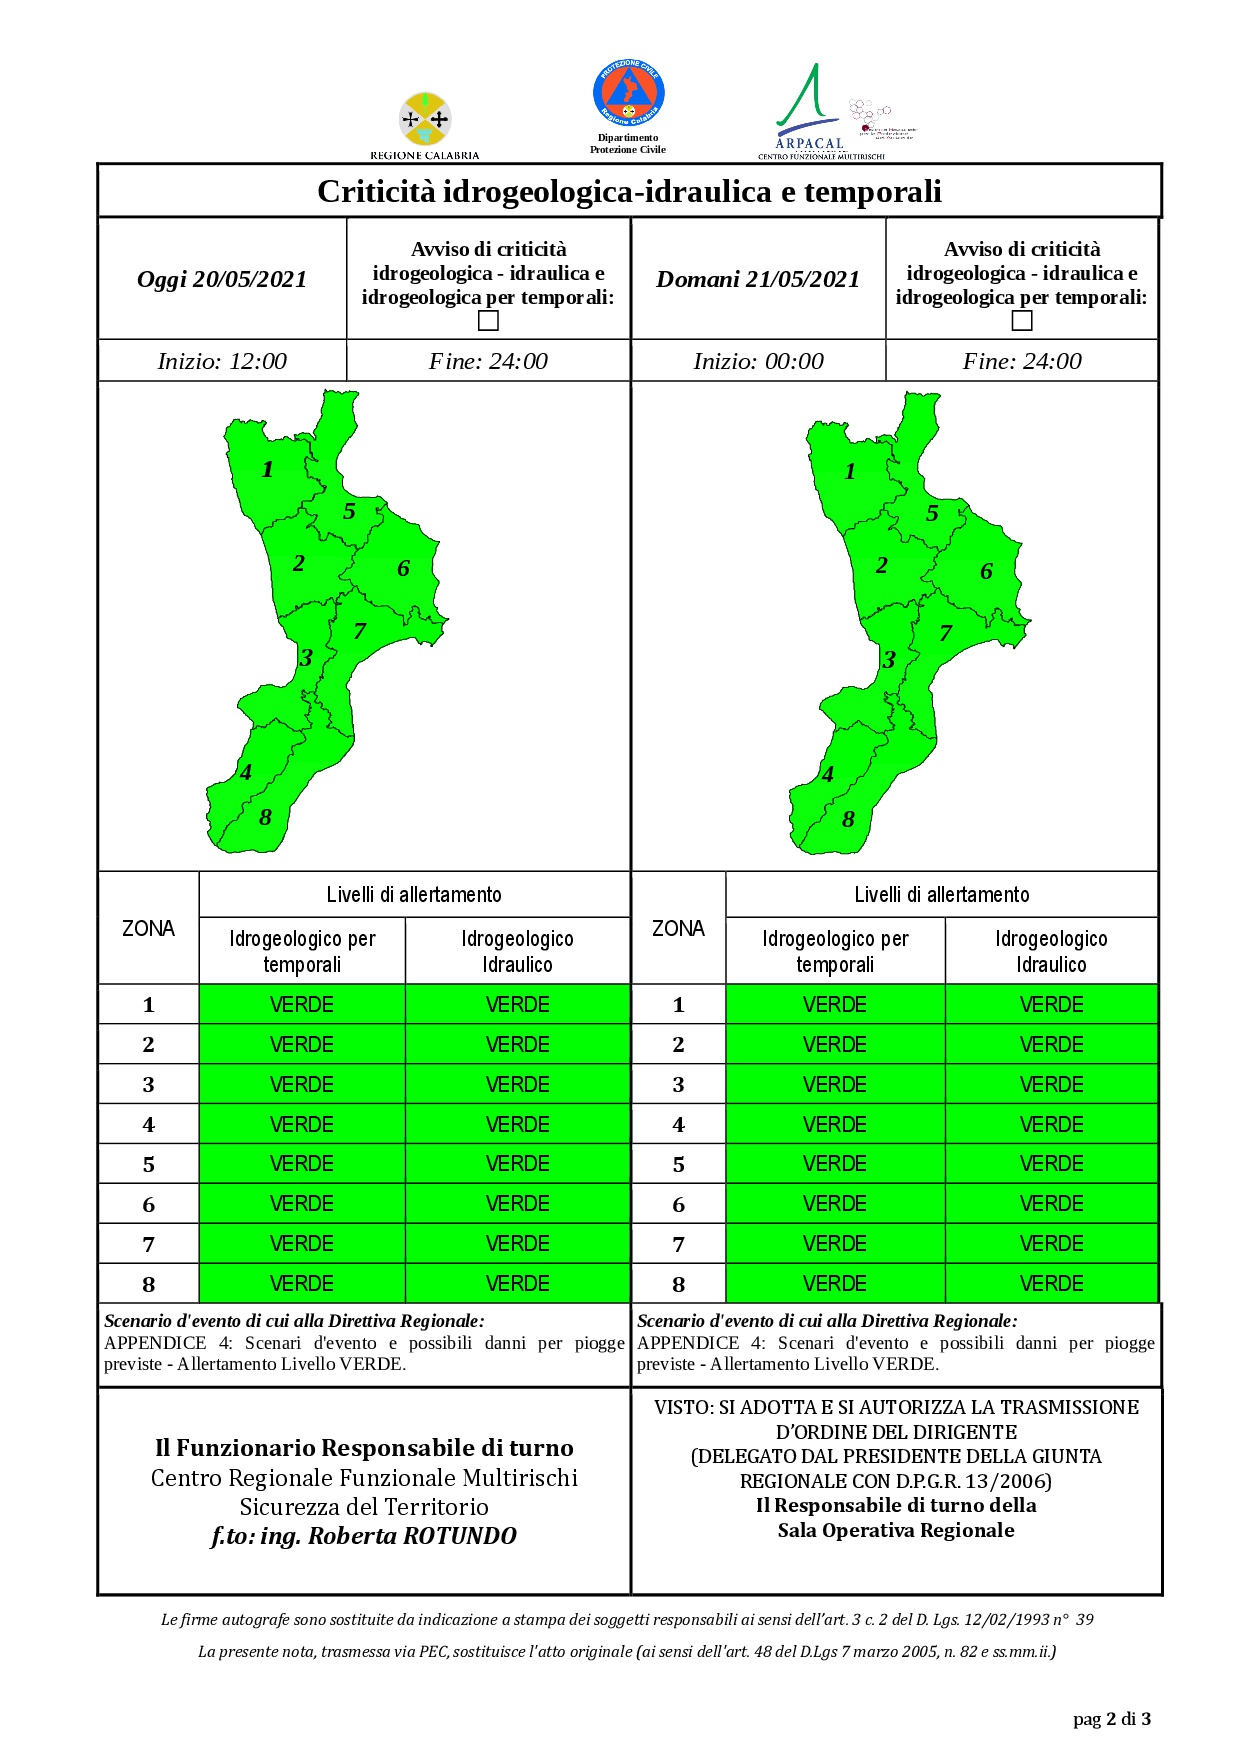 Criticità idrogeologica-idraulica e temporali in Calabria 20-05-2021